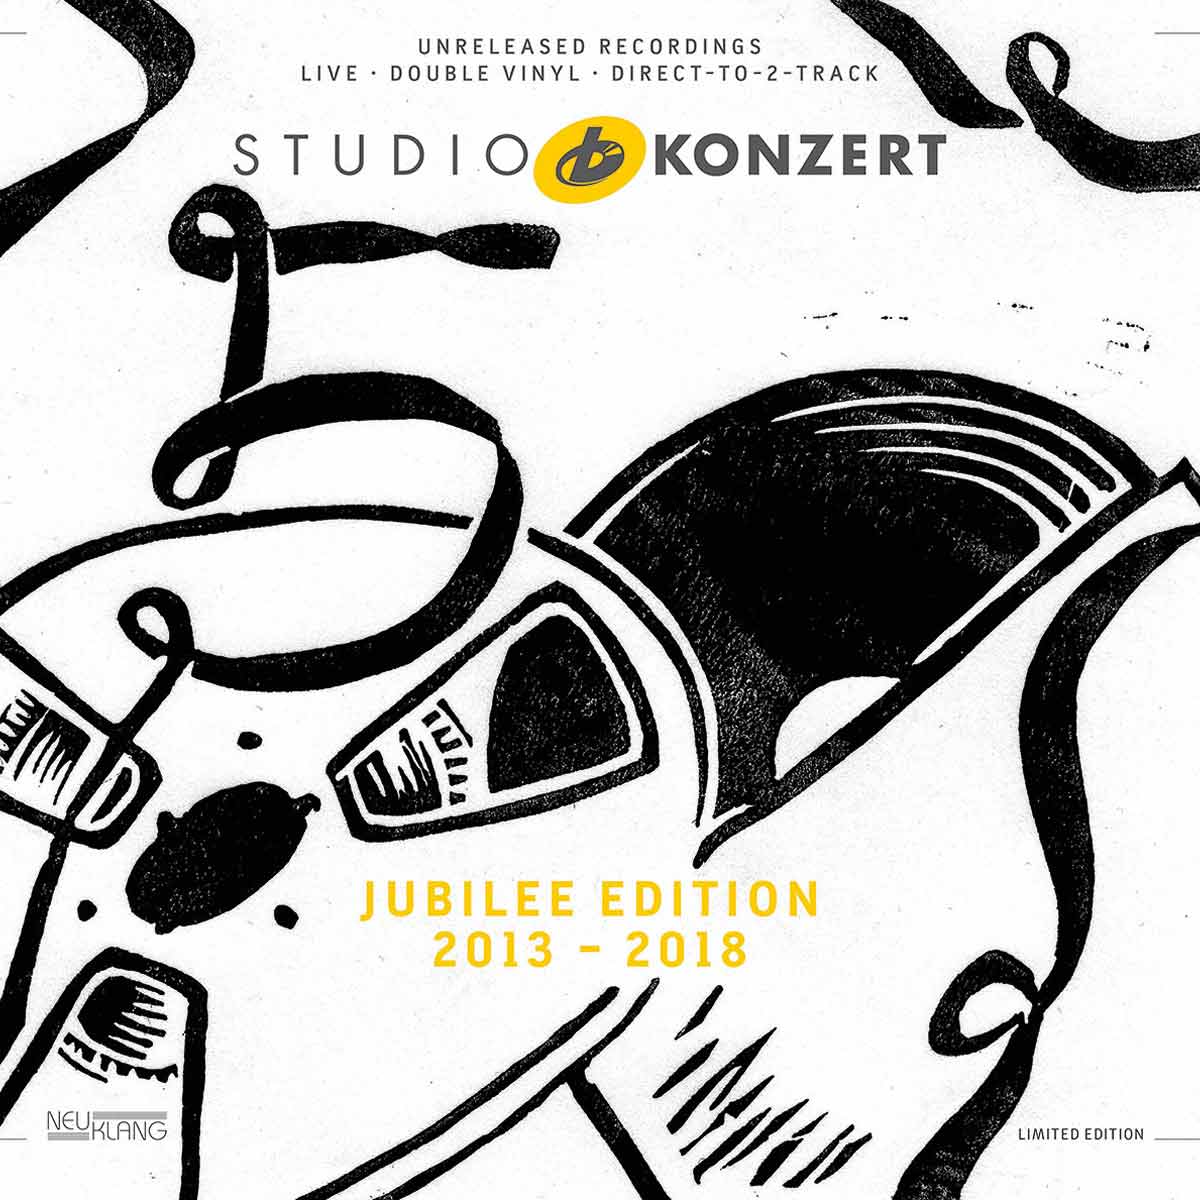 Studio Konzert - Jubilee Edition 2013 - 2018